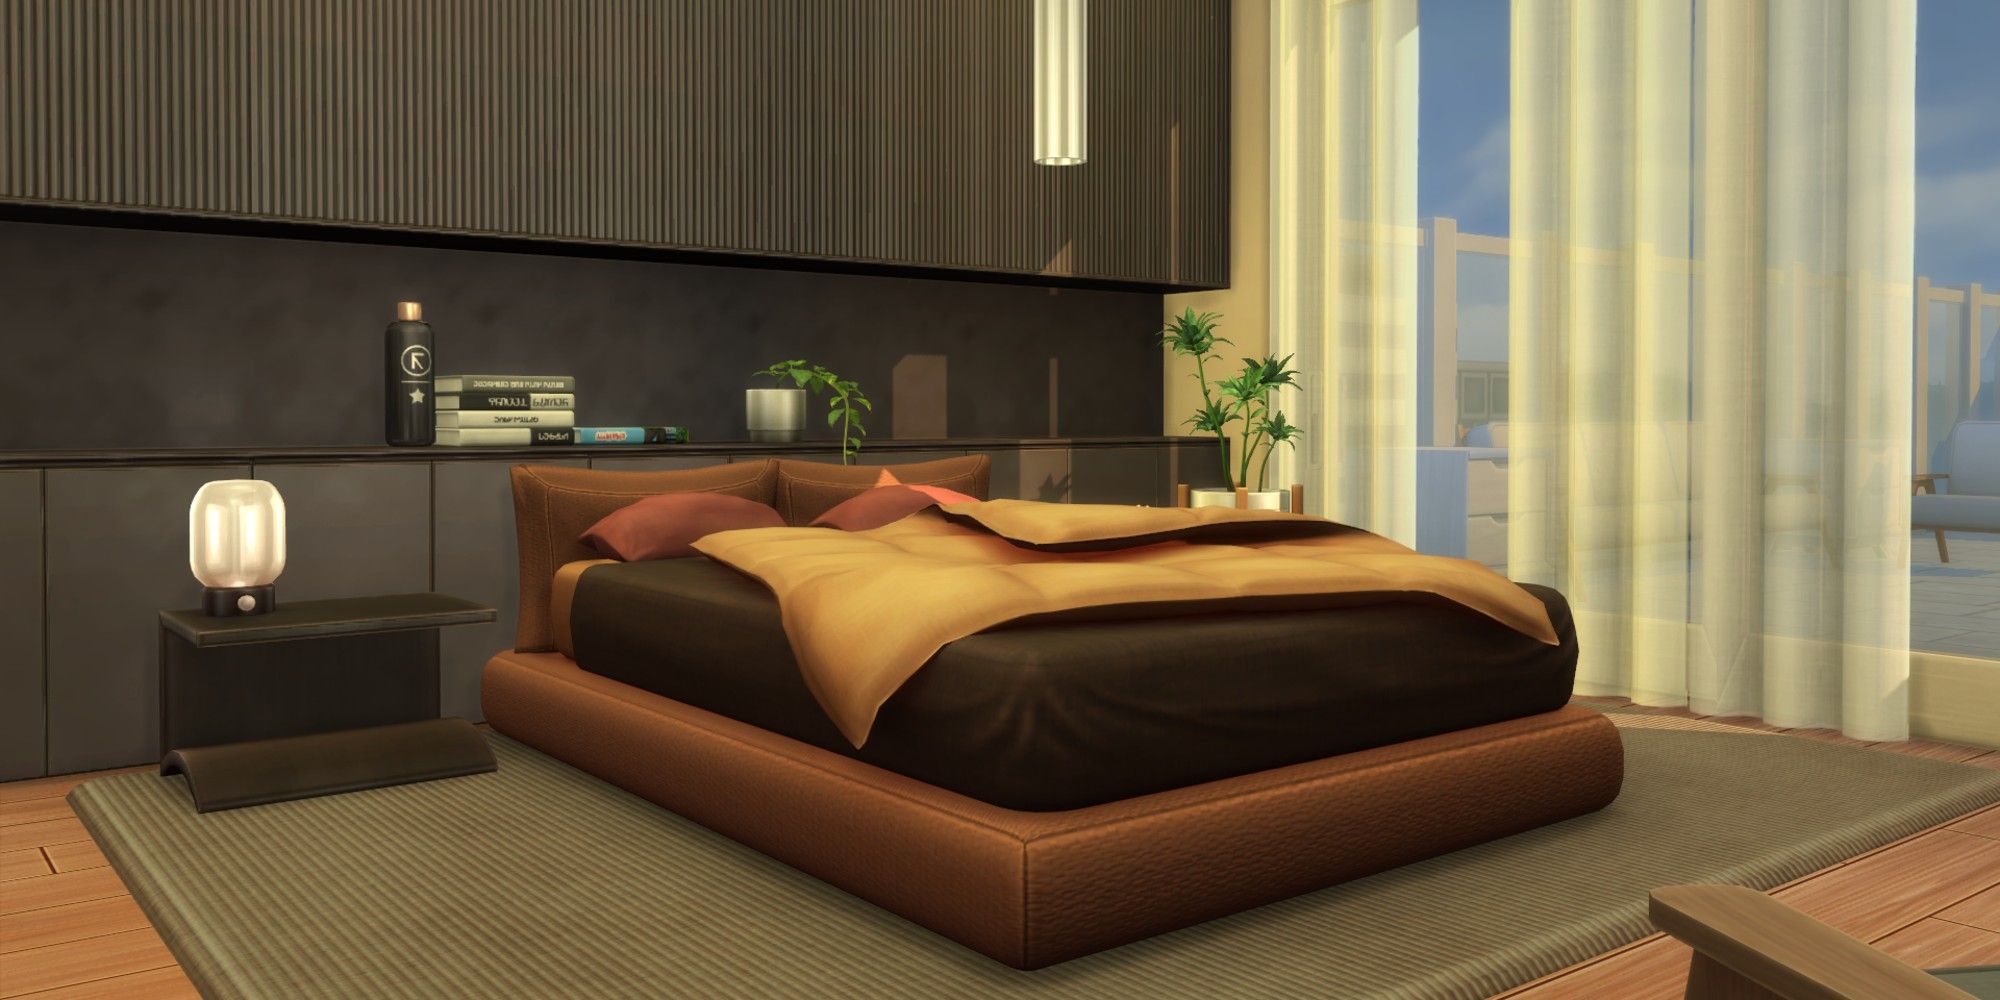 A bedroom created using the Sleek Slumber Custom Content Stuff Pack by LittleDica